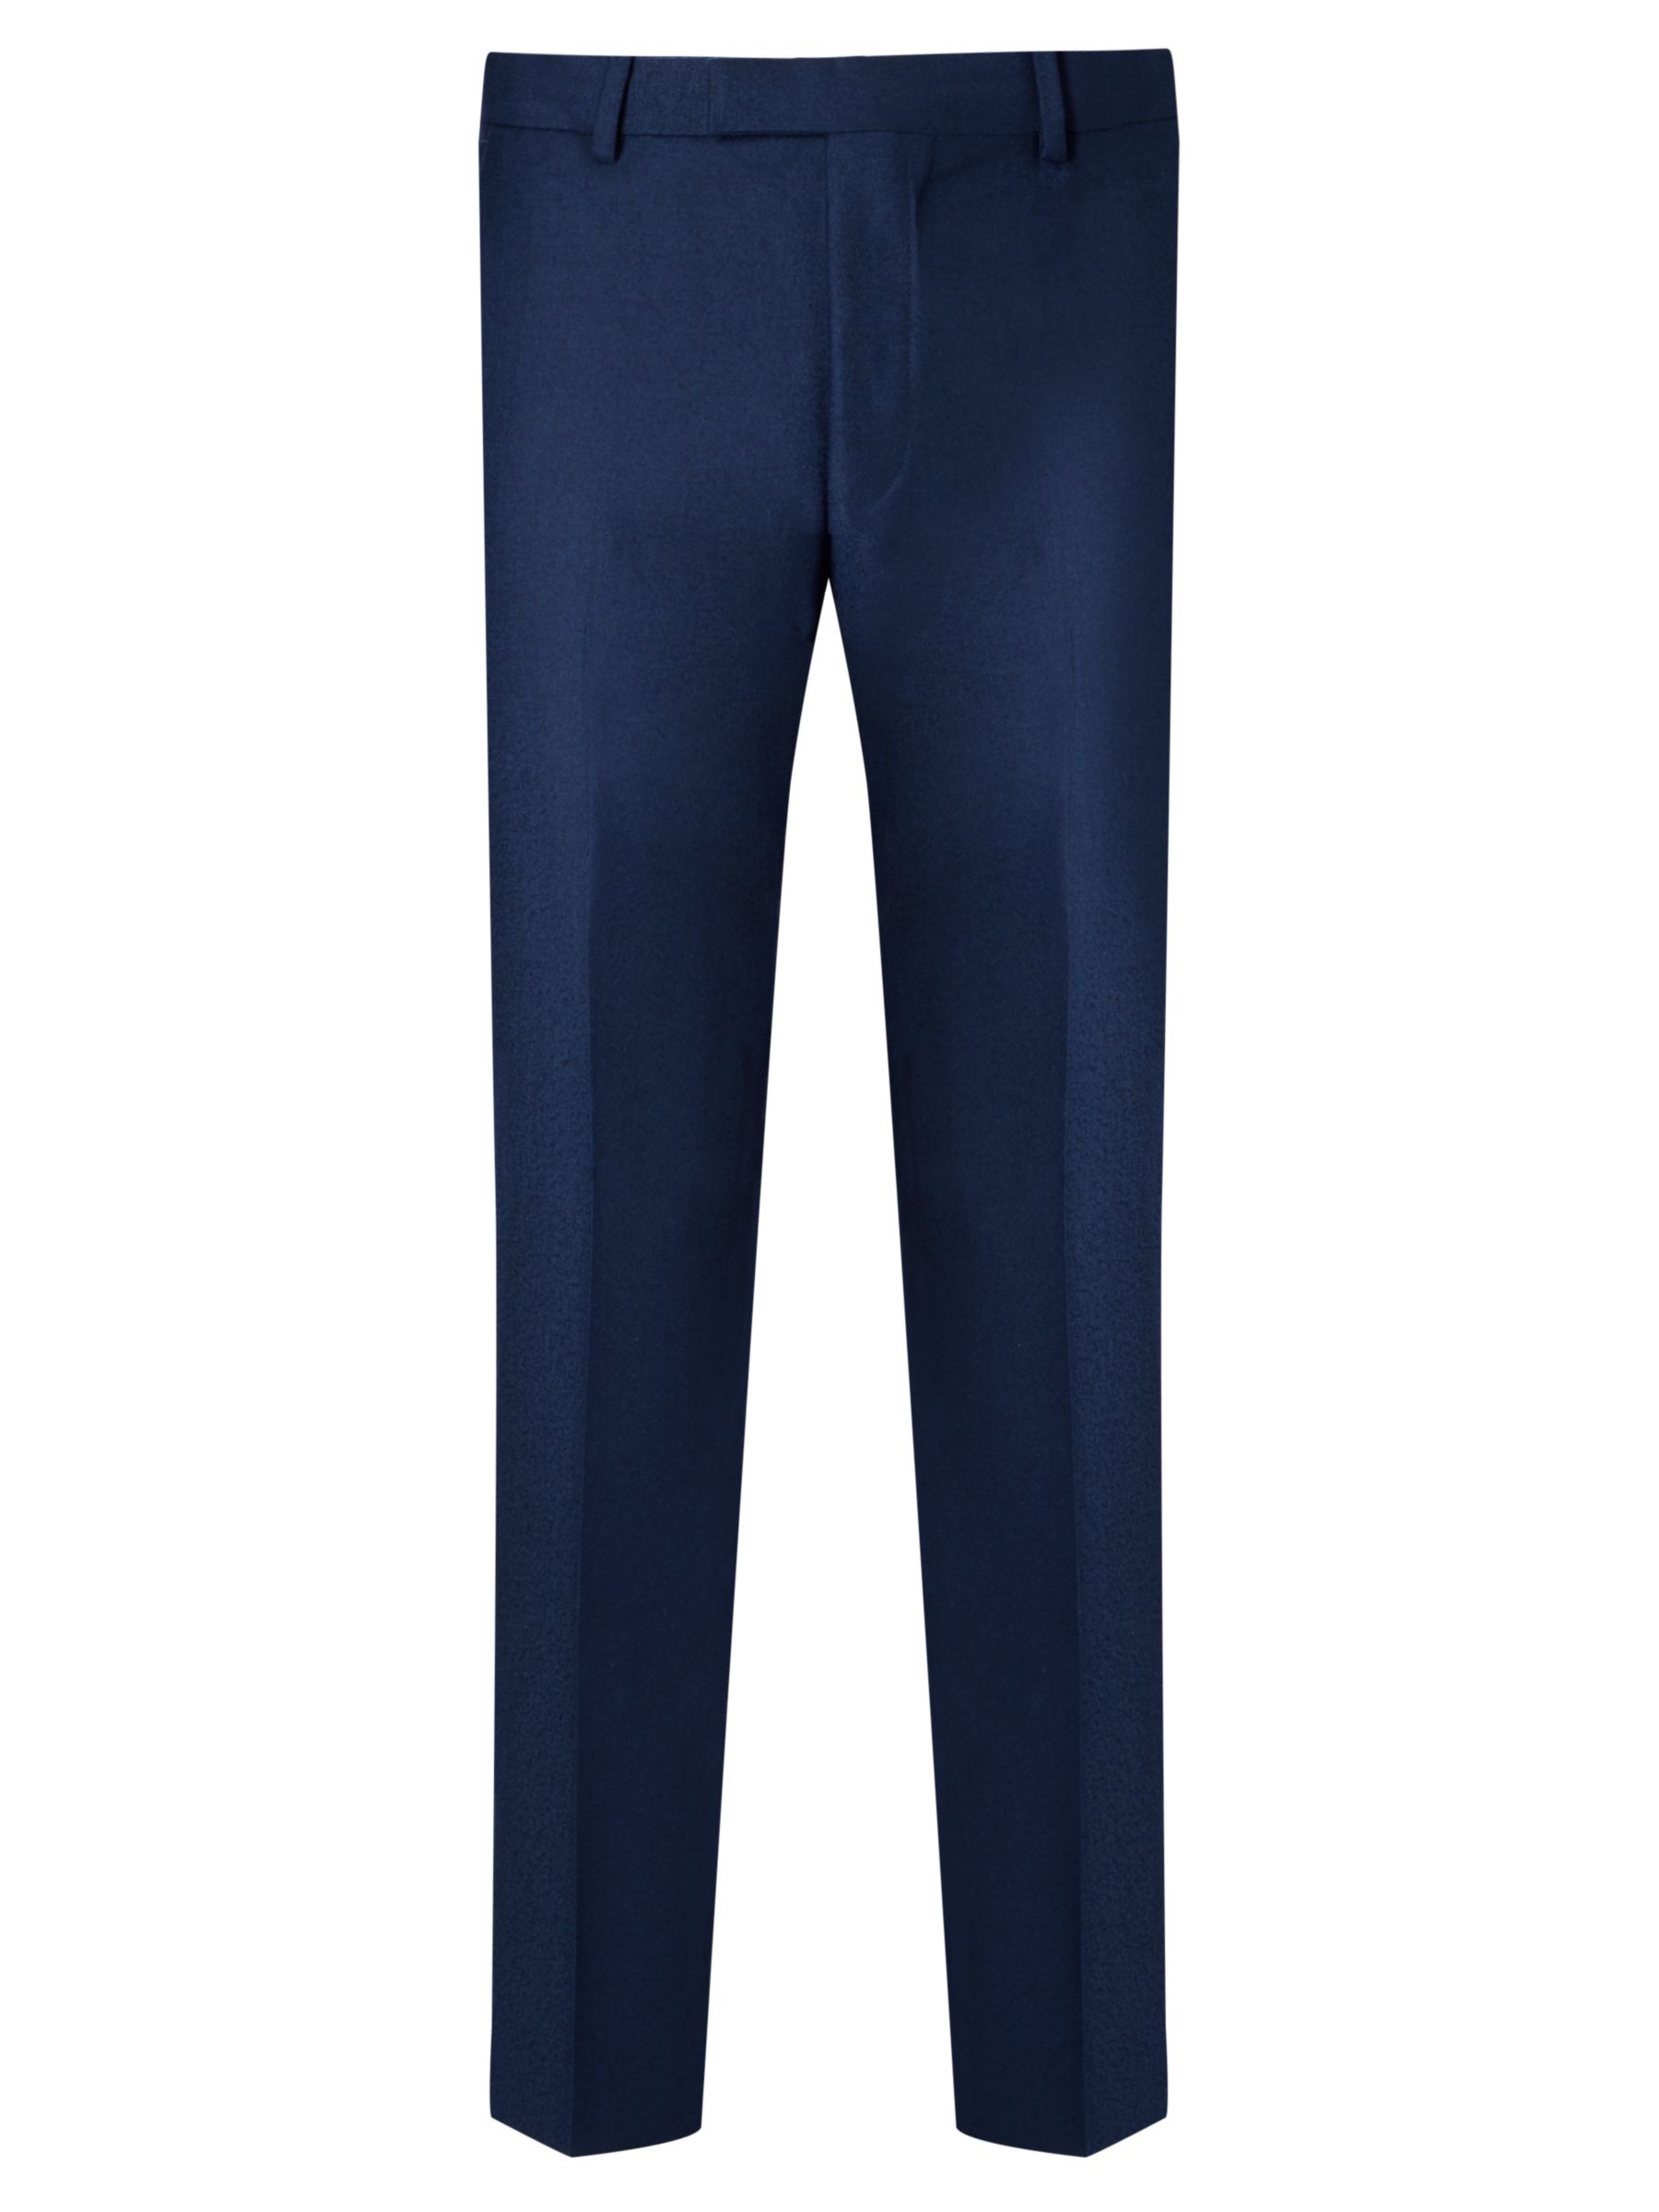 Daniel Hechter Flannel Tailored Suit Trousers, Blue